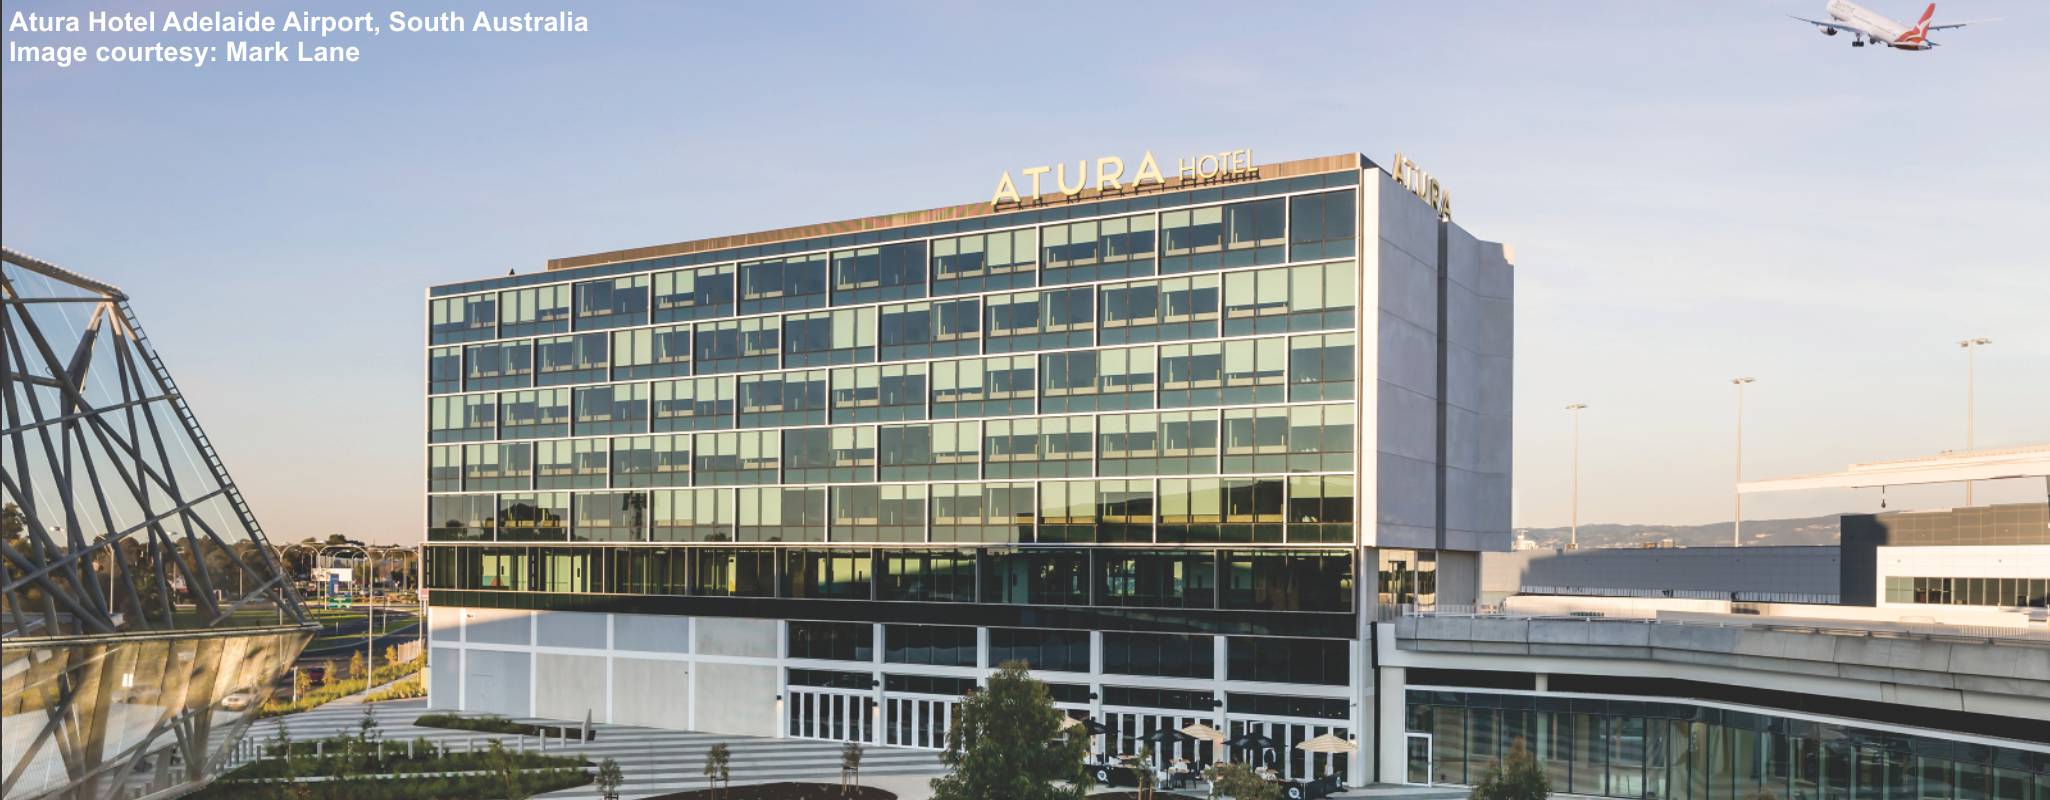 Atura Adelaide Airport image